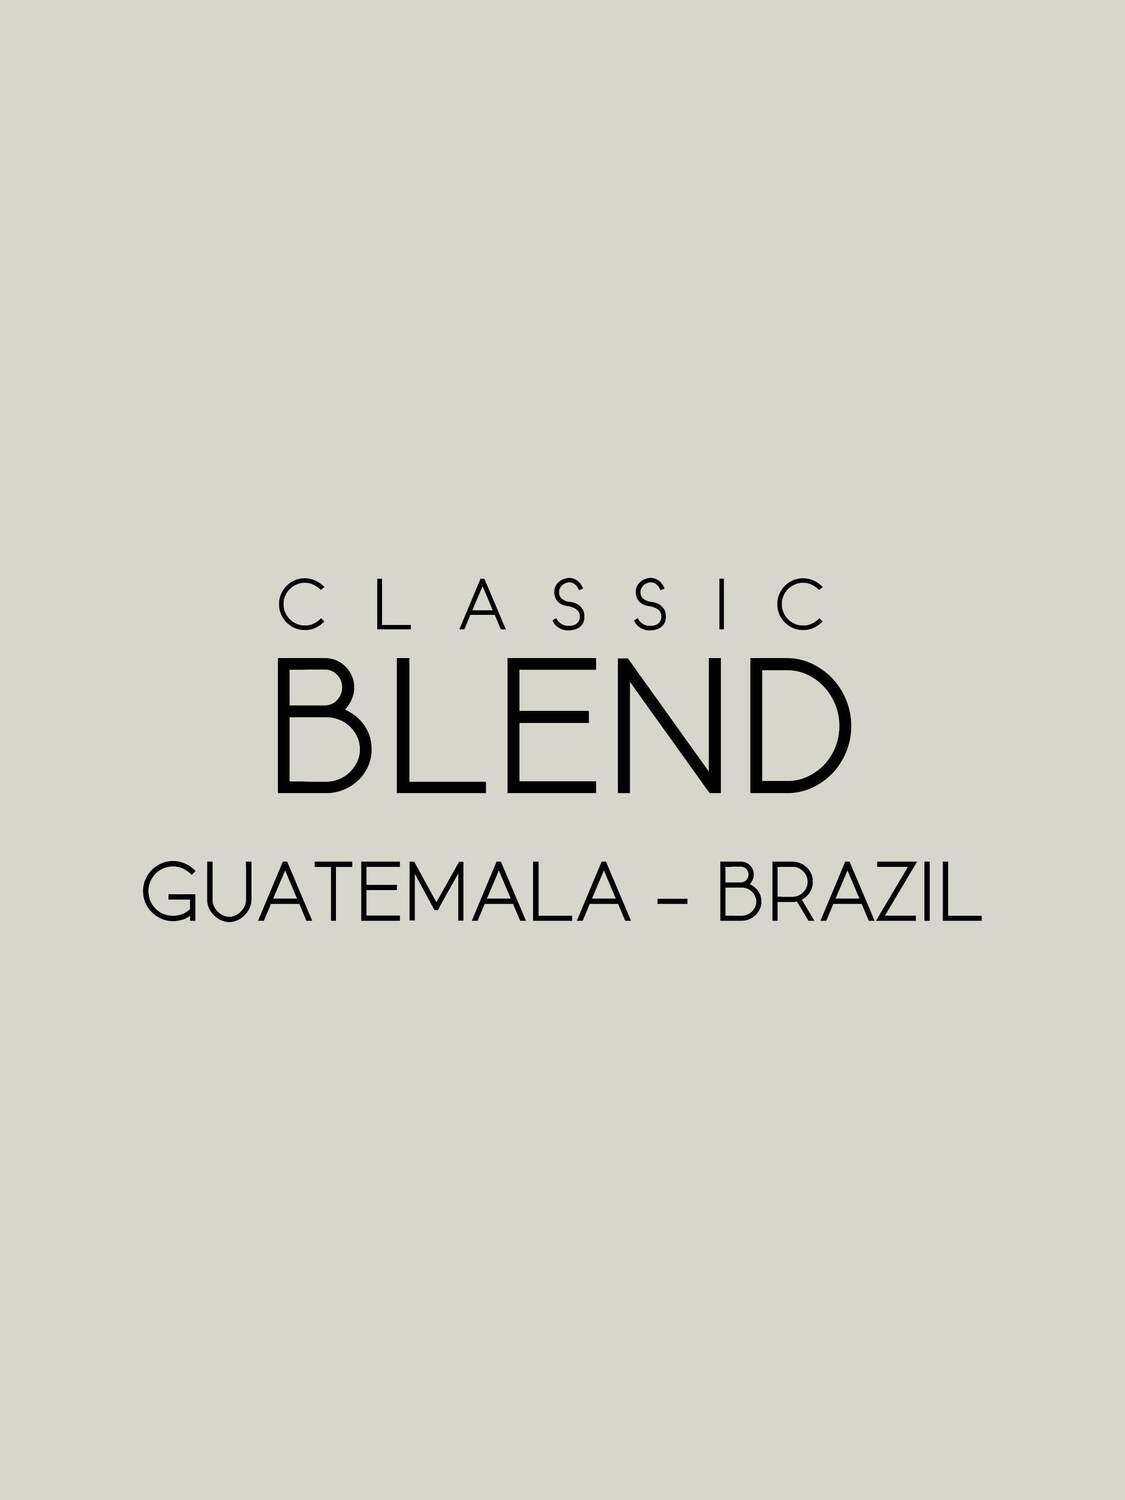 Blend Guatemala - Brazil